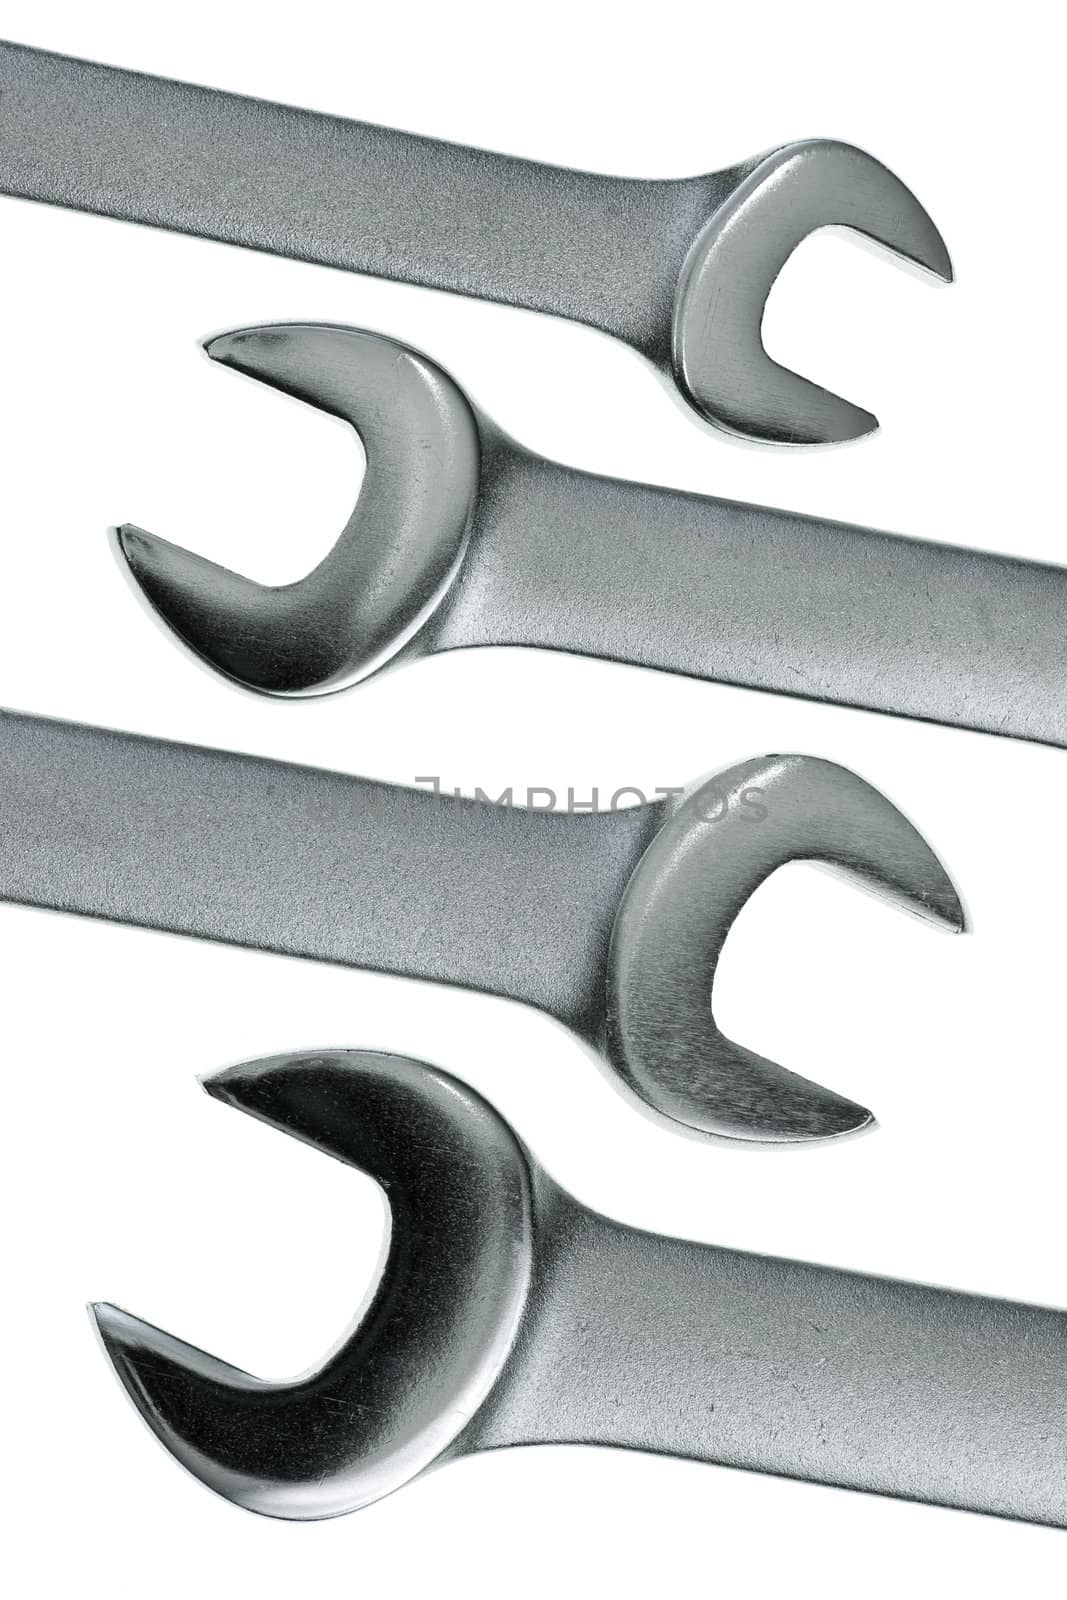 Set of chrome lug wrenches on white background